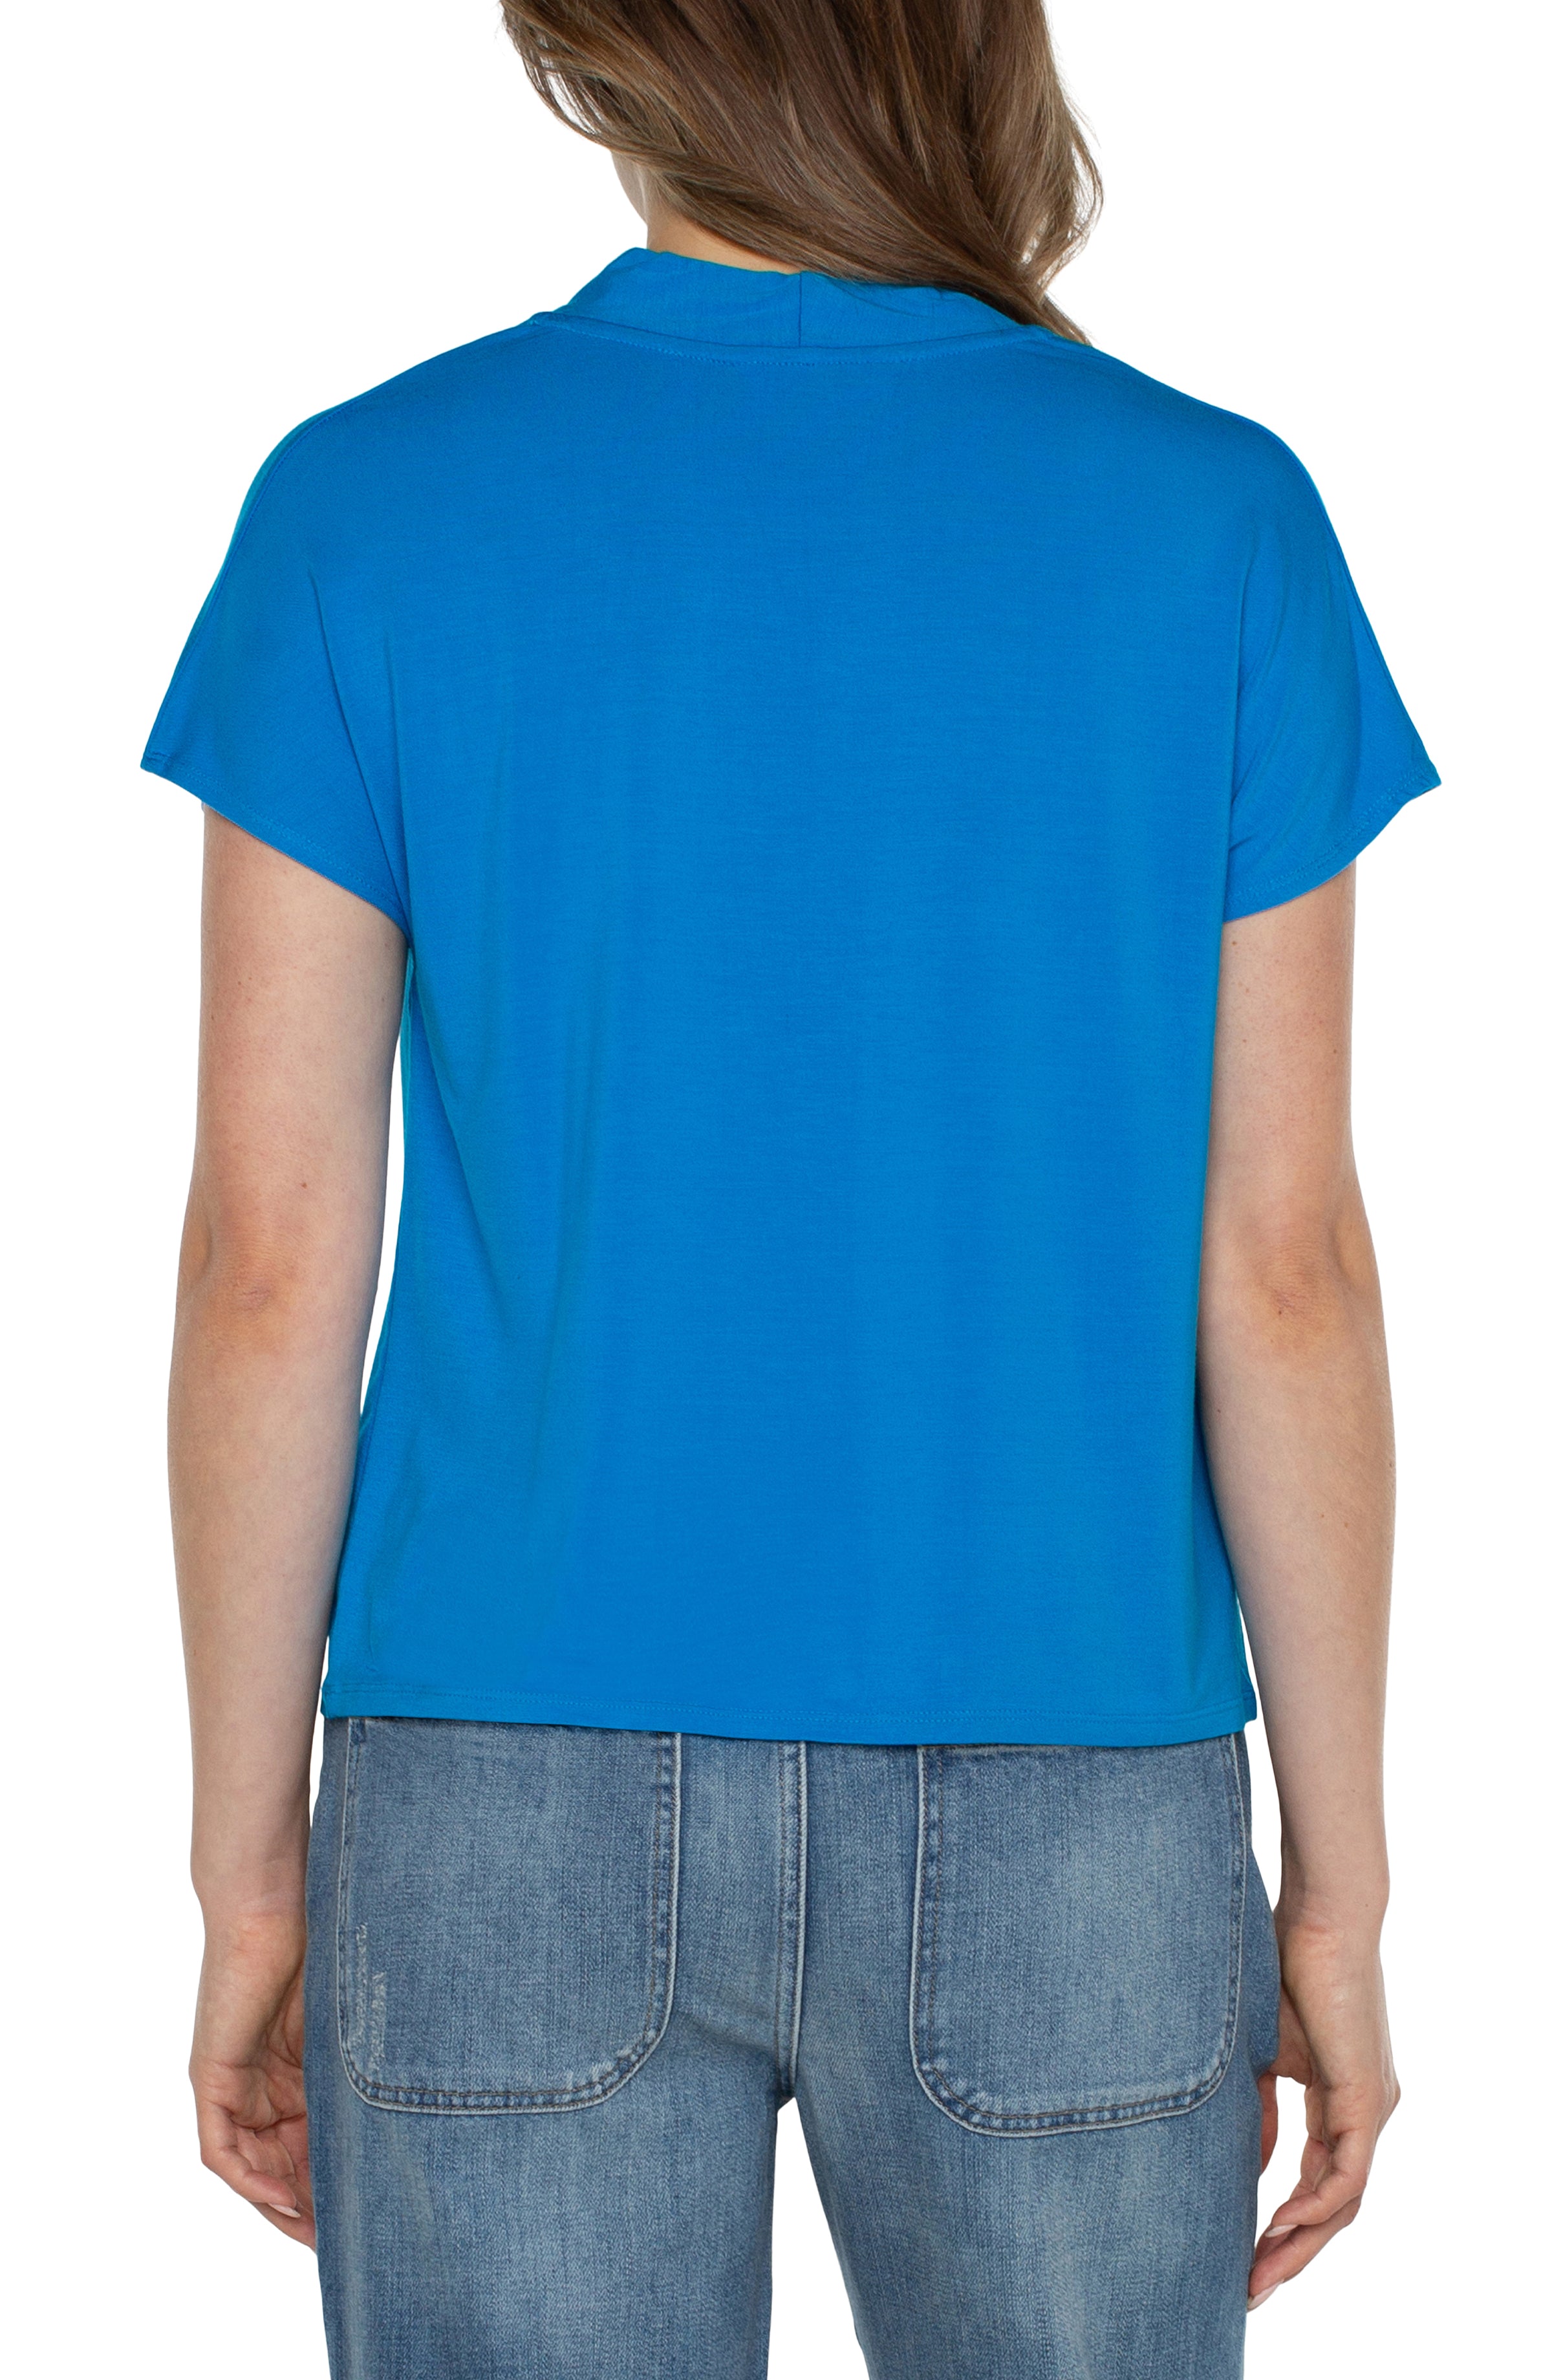 Liverpool Shawl Collar Short Sleeve Dolman Knit Top - Diva Blue Back View